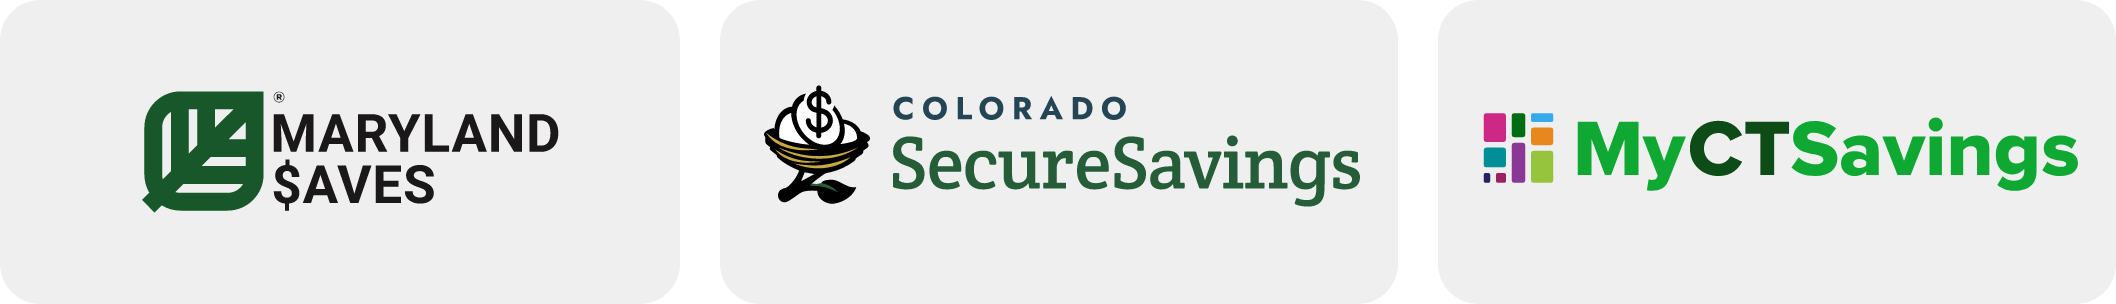 MarylandSaves logo, Colorado SecureSavings logo and MyCTSavings logo